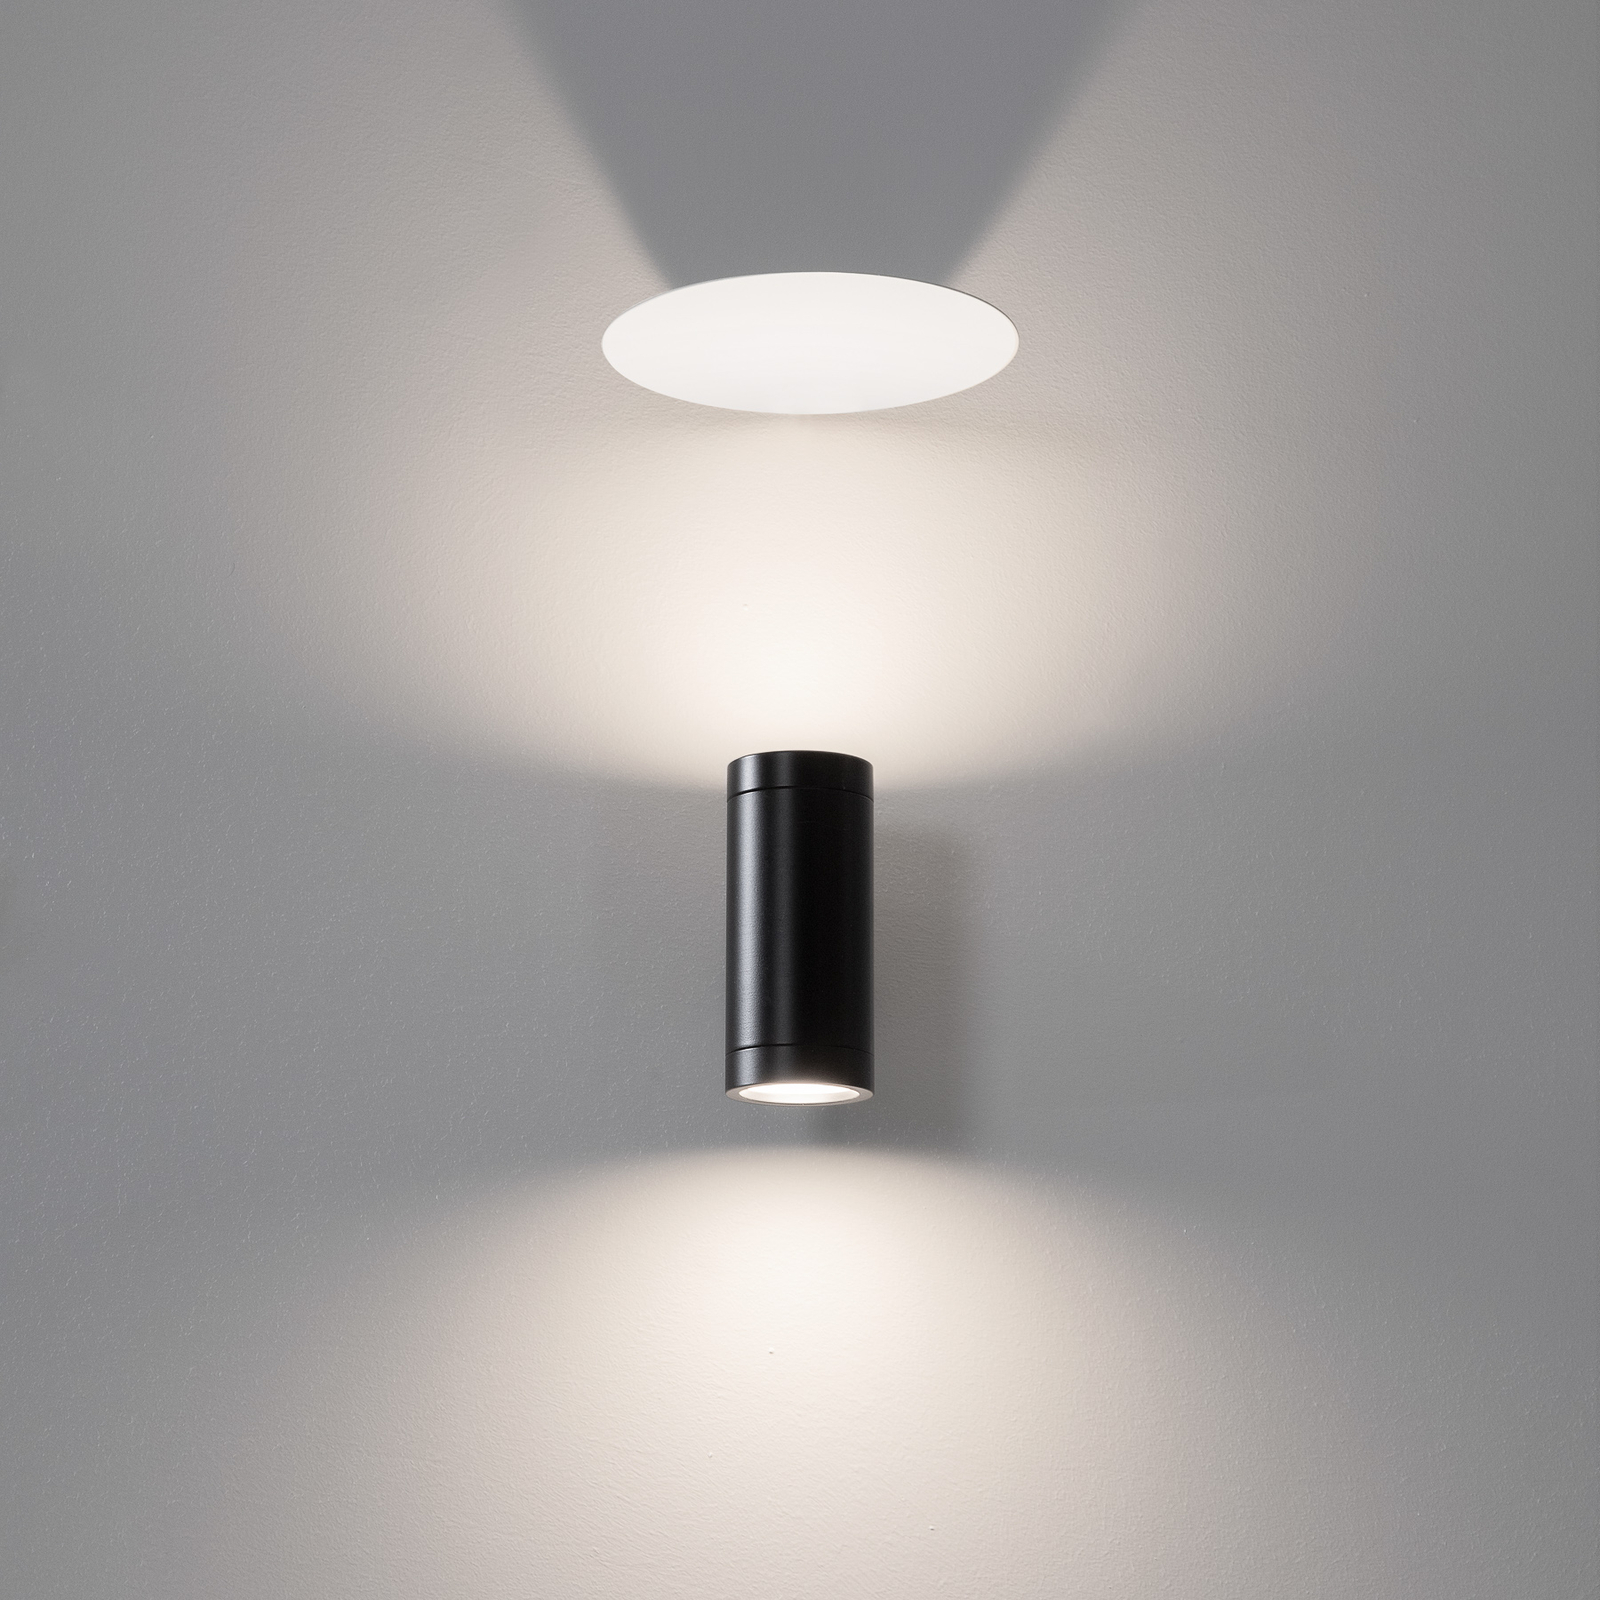 Karman Deflektor für Movida LED-Wandleuchte weiß